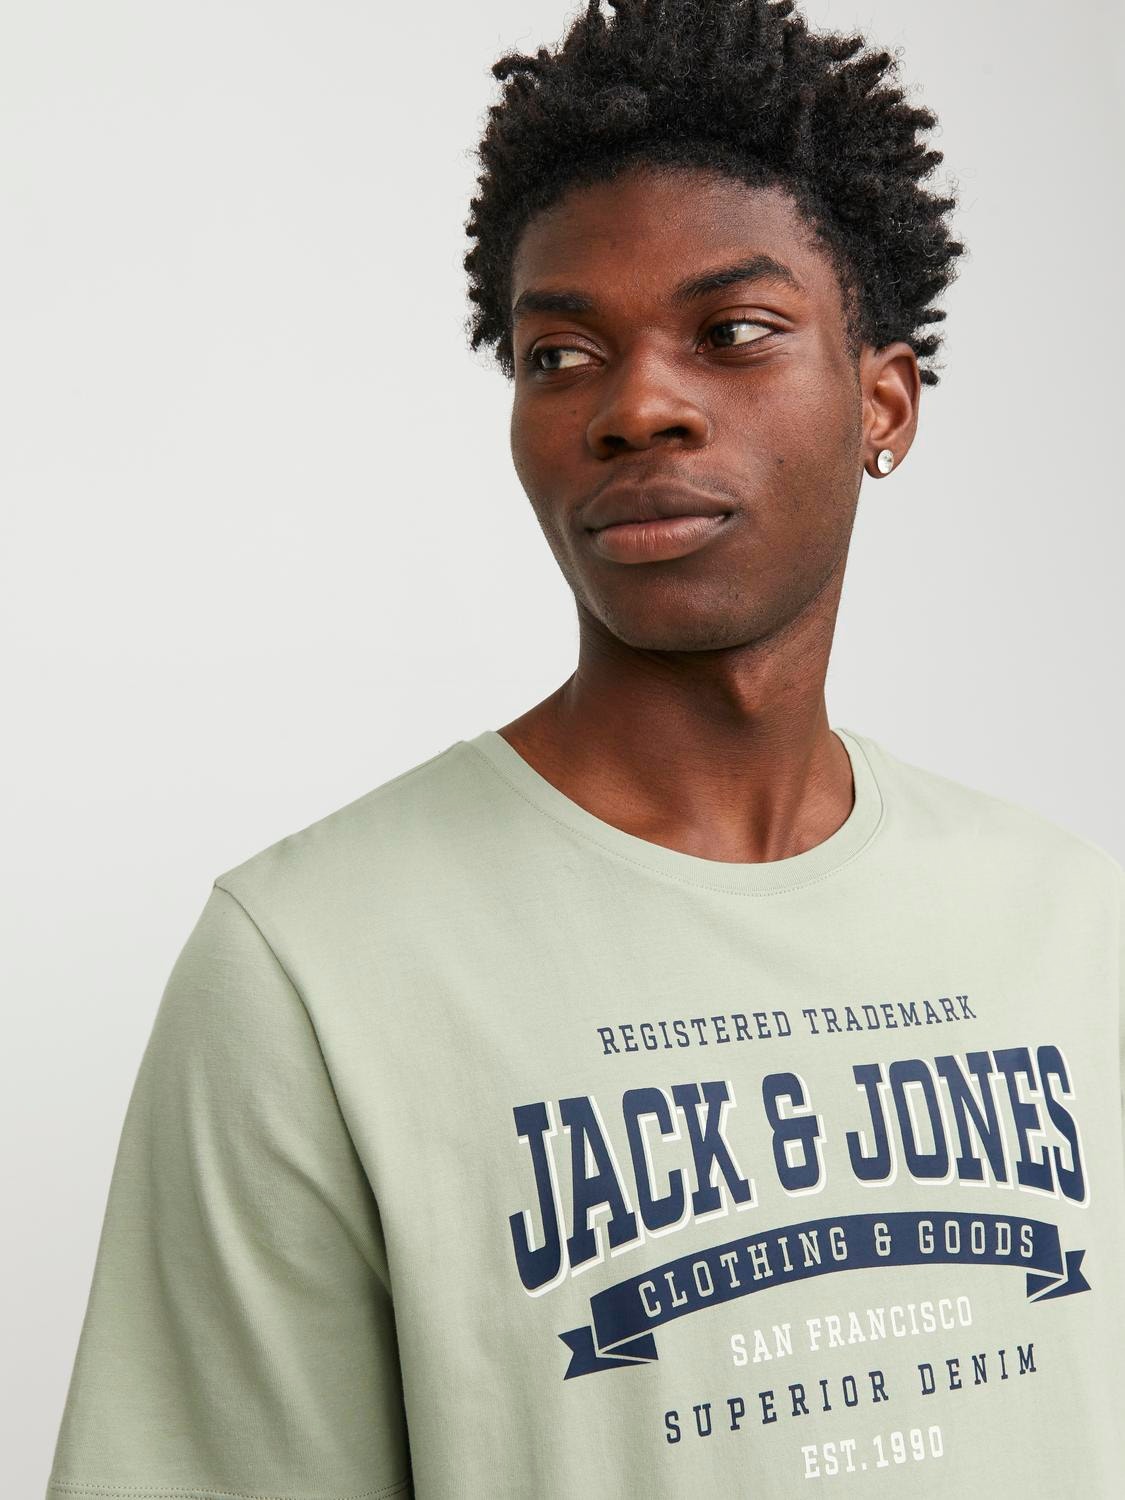 Jack & Jones T-shirt Logo Decote Redondo -Desert Sage - 12246690